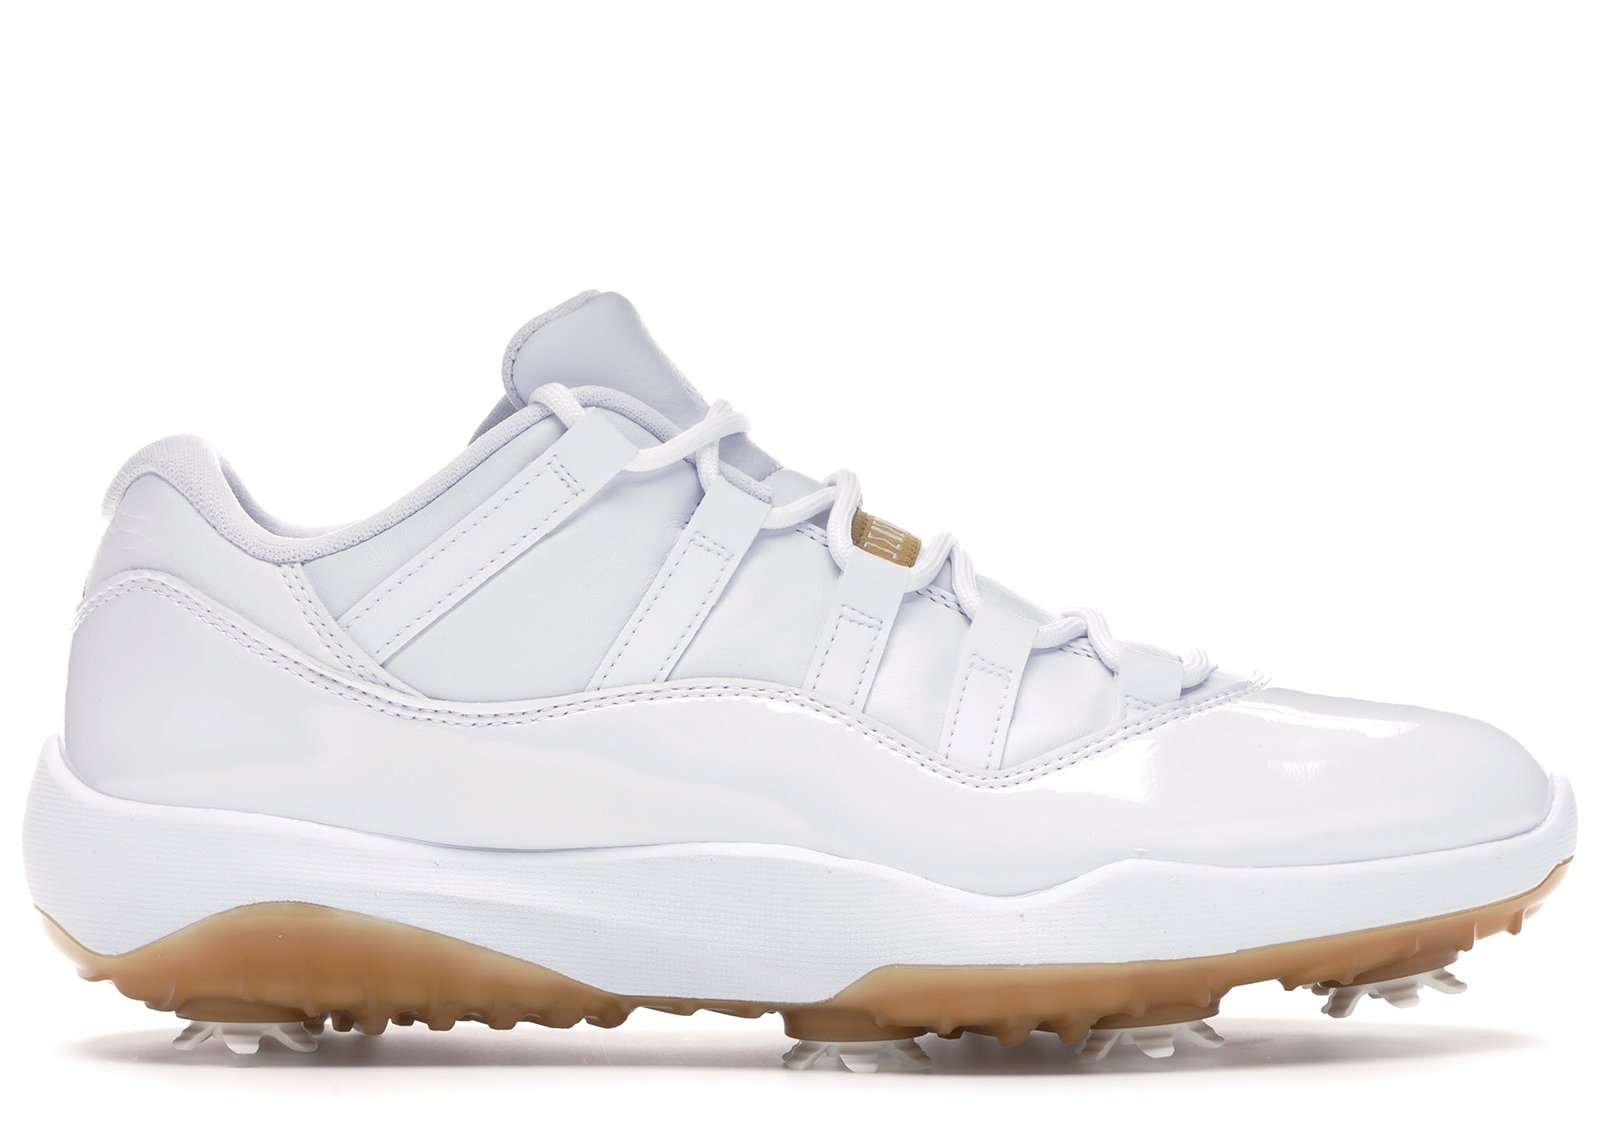 Jordan 11 Retro Low Golf White Metallic Gold sneakers